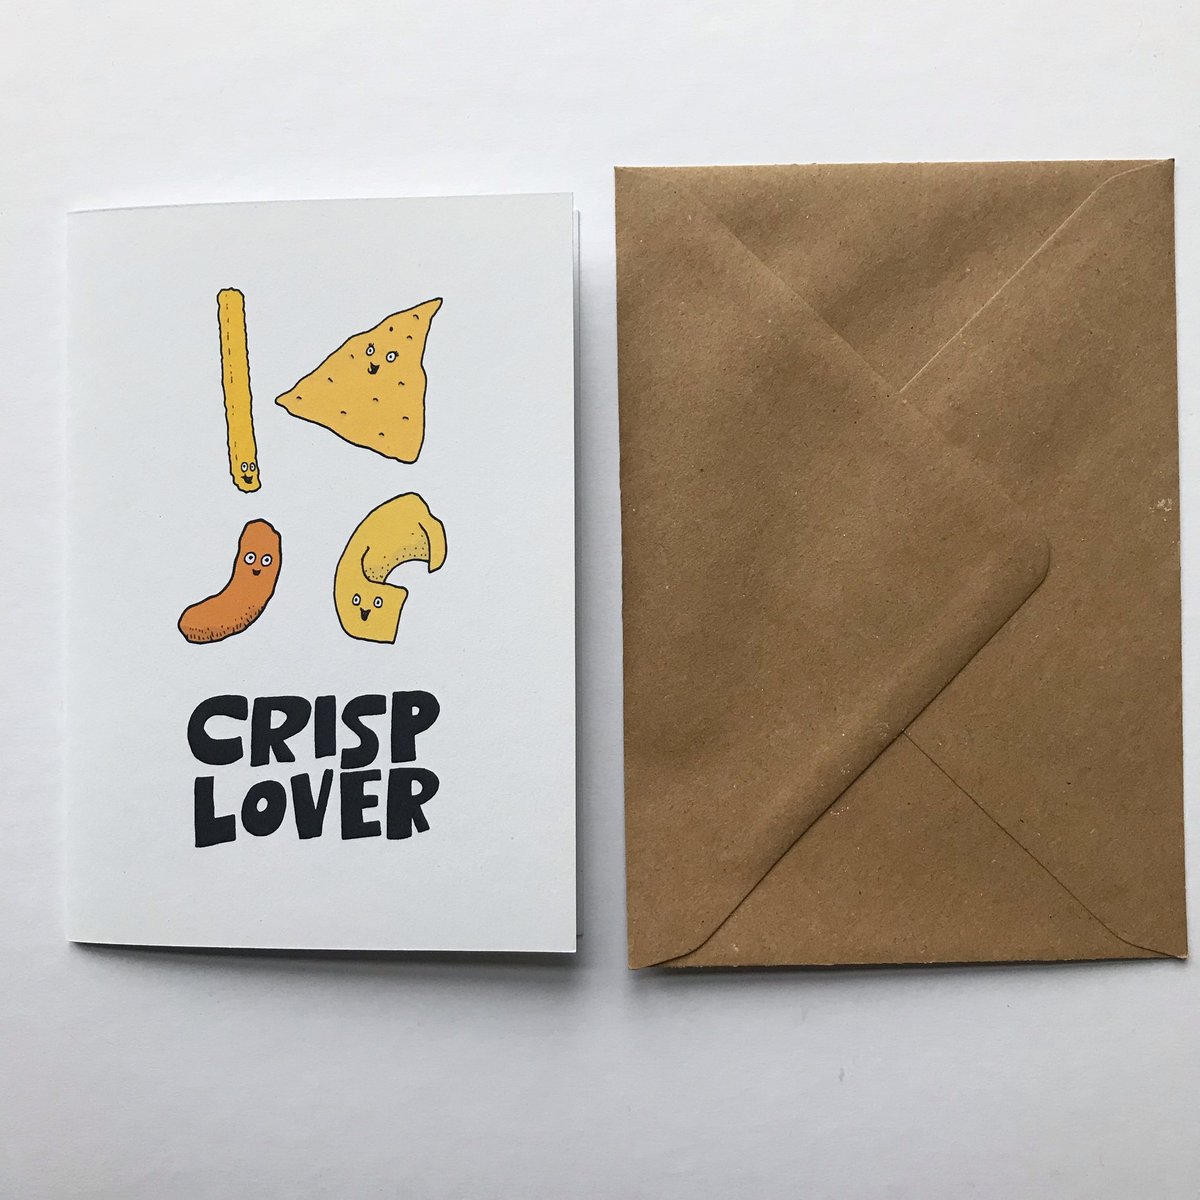 Image of CRISP LOVER CARD BY FINGSMCR